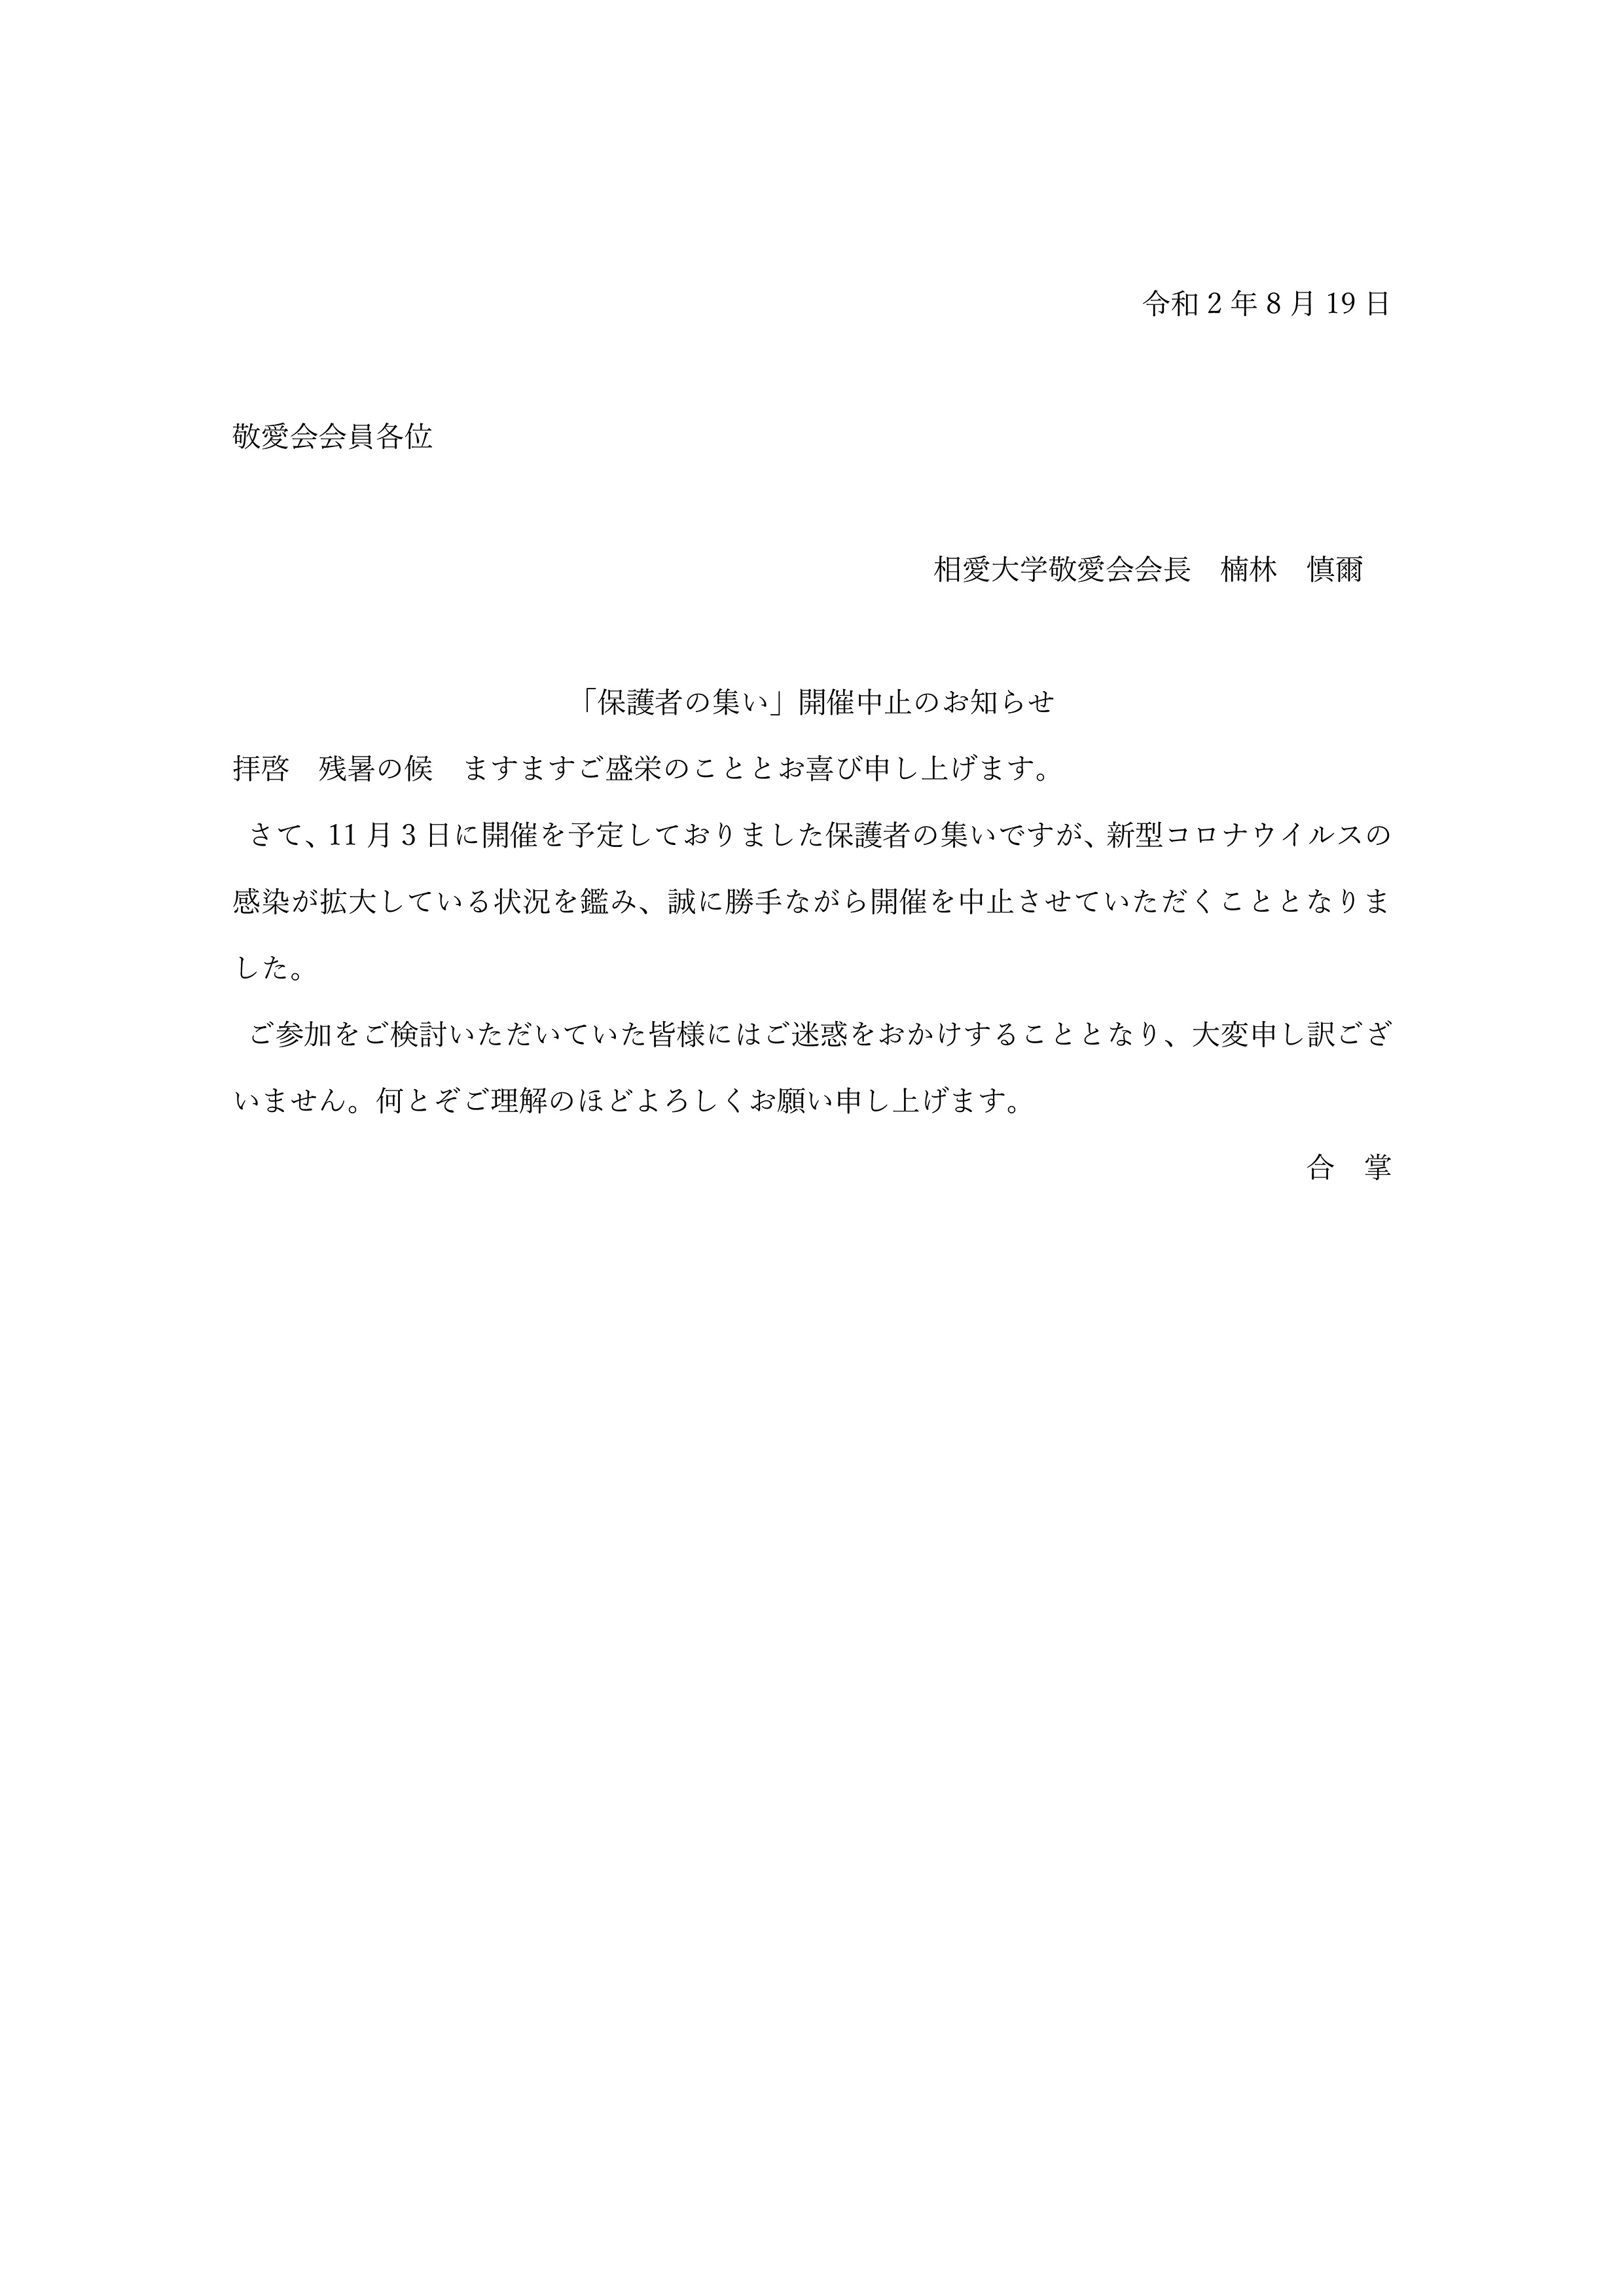 https://www.soai.ac.jp/information/news/hogoshatsudoi_2020.jpg